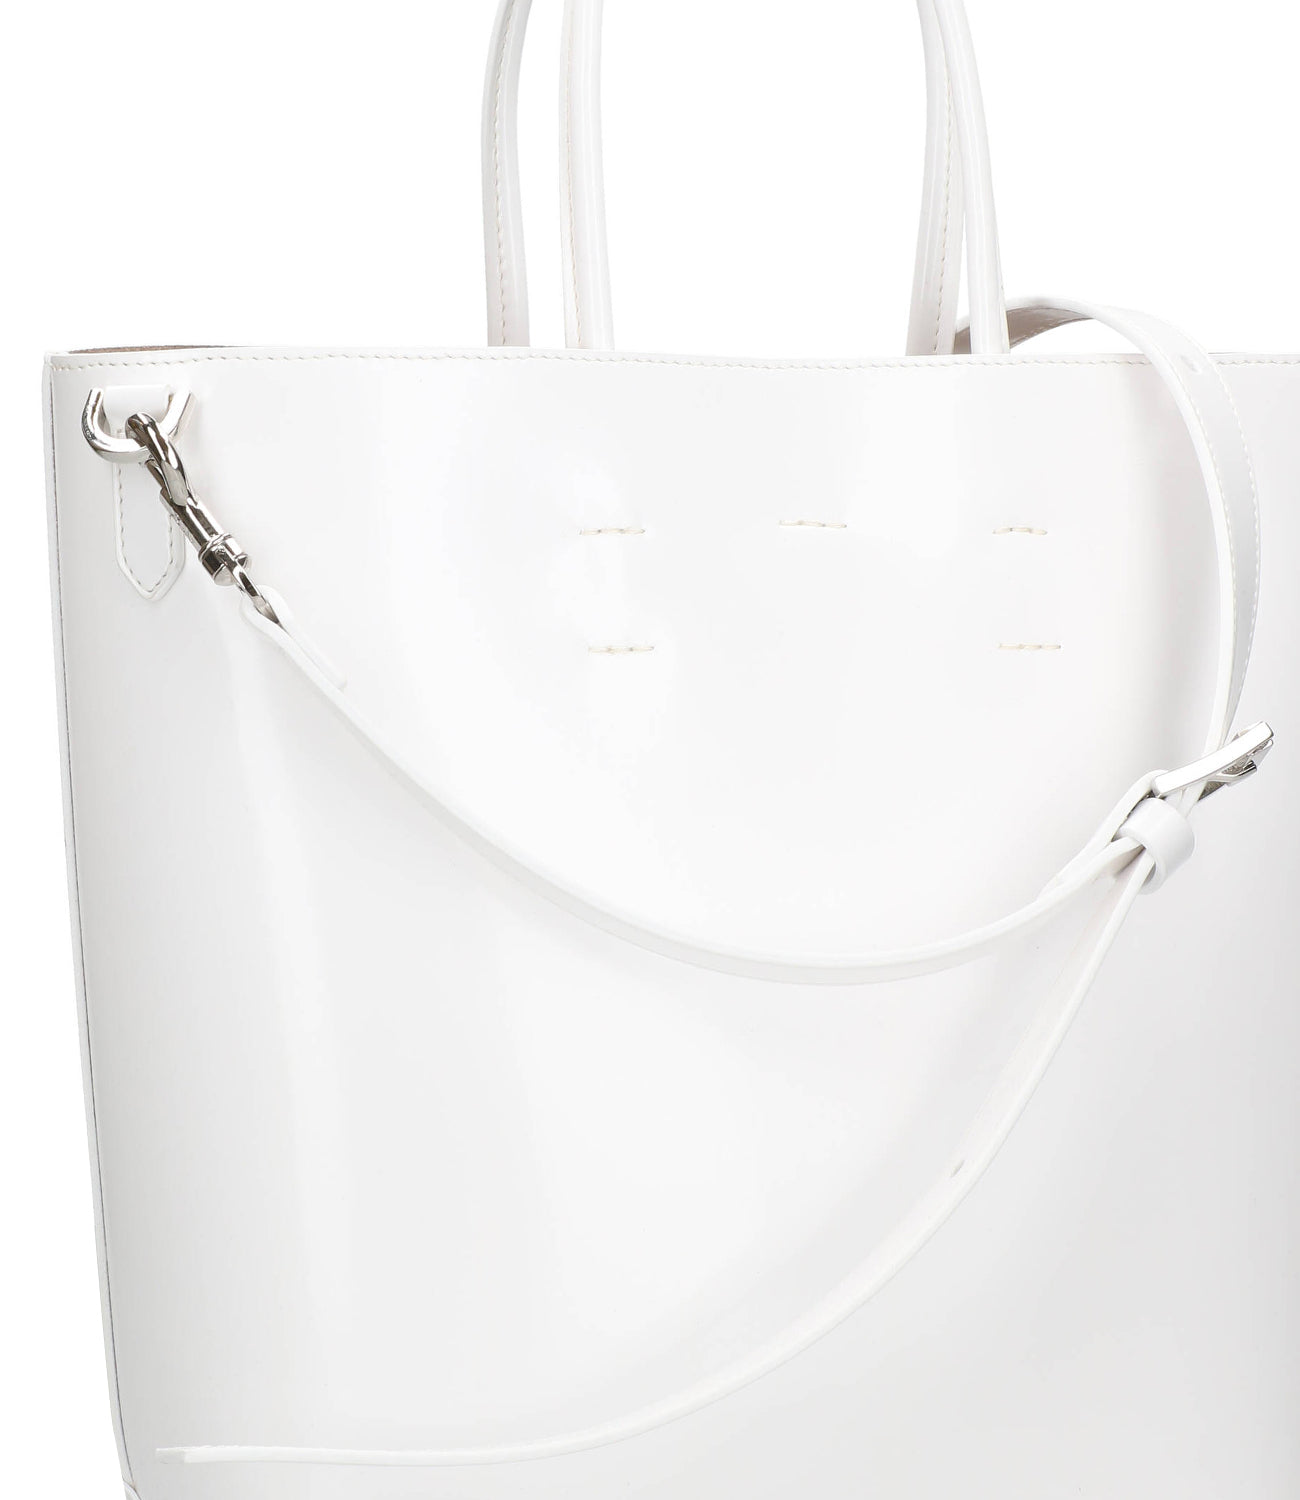 N 21 | Small Shopping Bag White